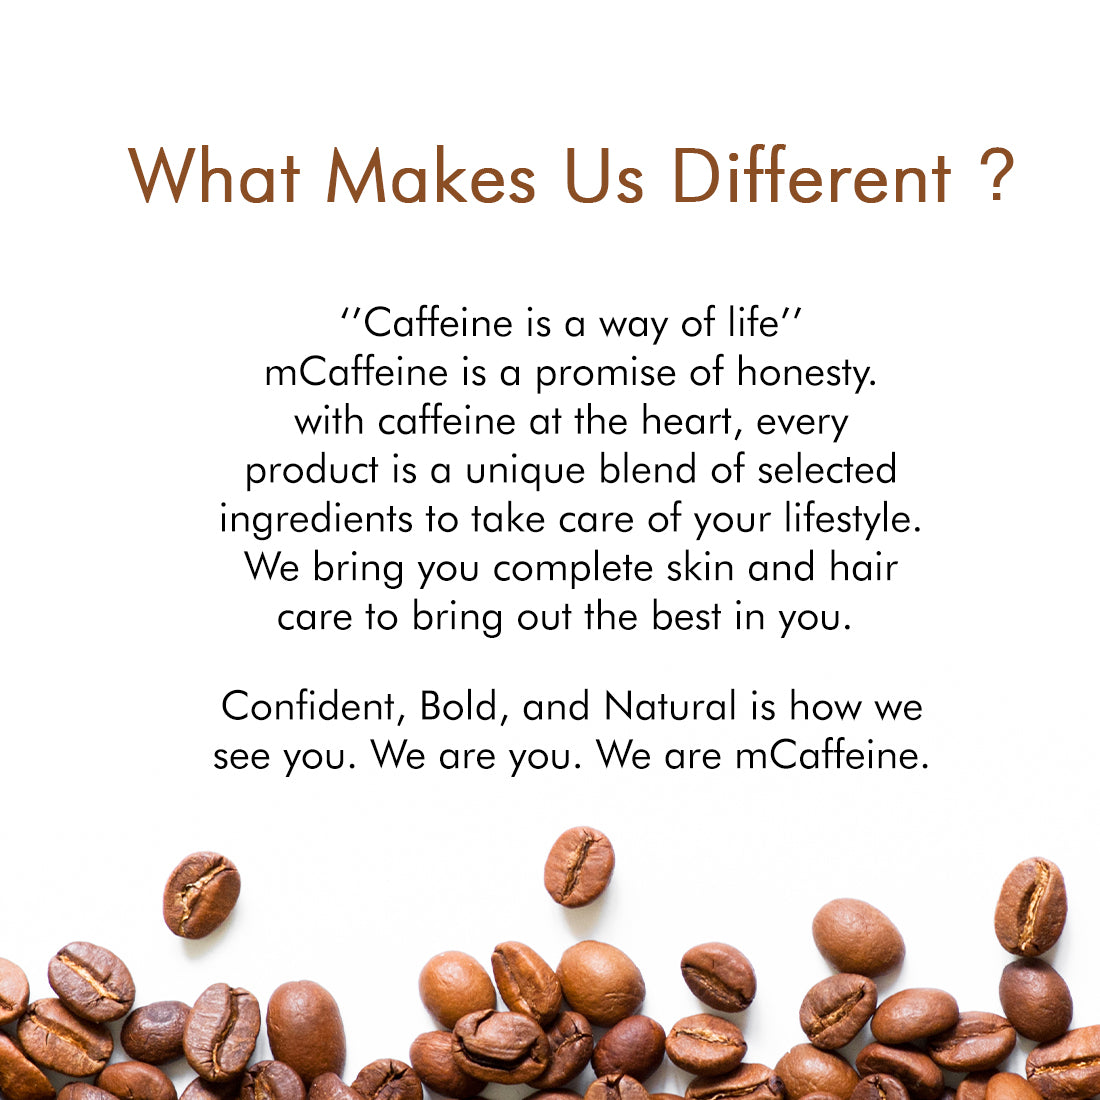 mCaffeine Naked and Raw Coffee Face Moisturizer (50ml)